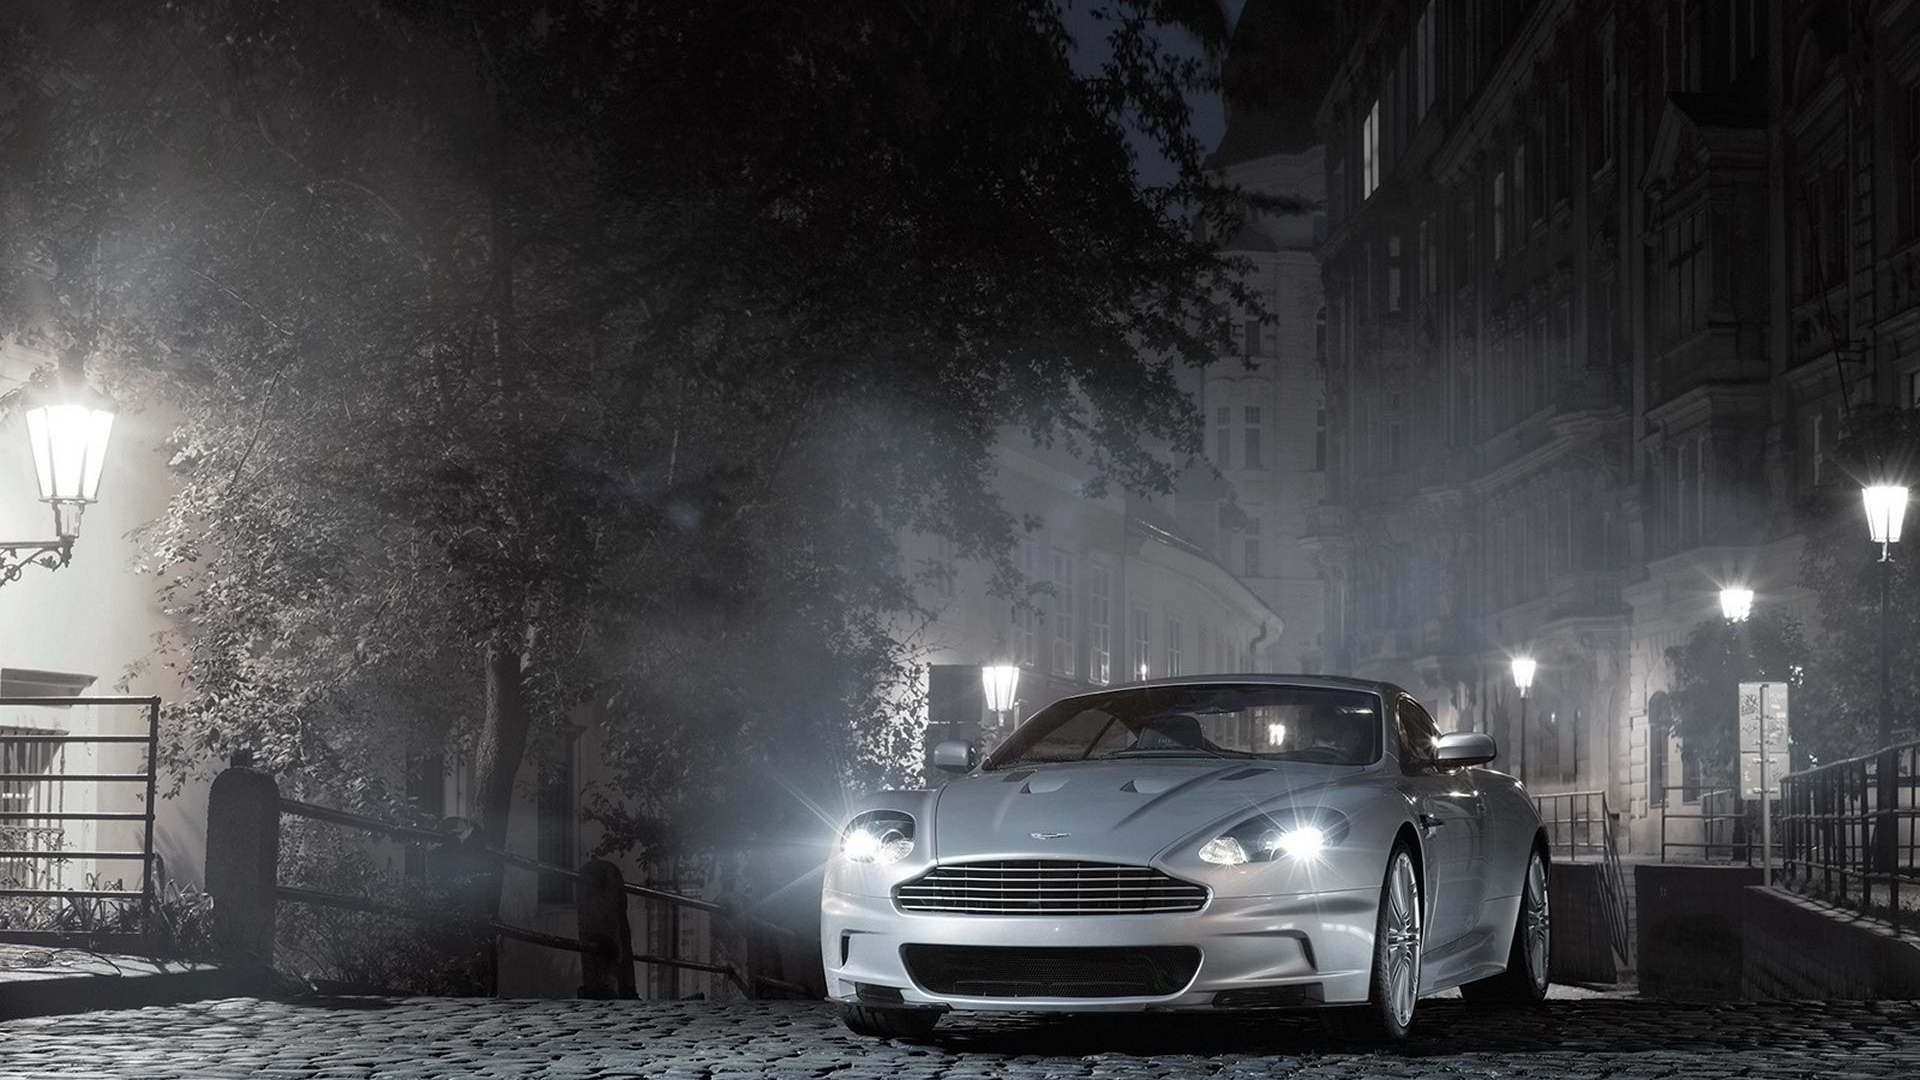 General 1920x1080 car street light trees mist cityscape night Aston Martin Aston Martin DBS vehicle British cars